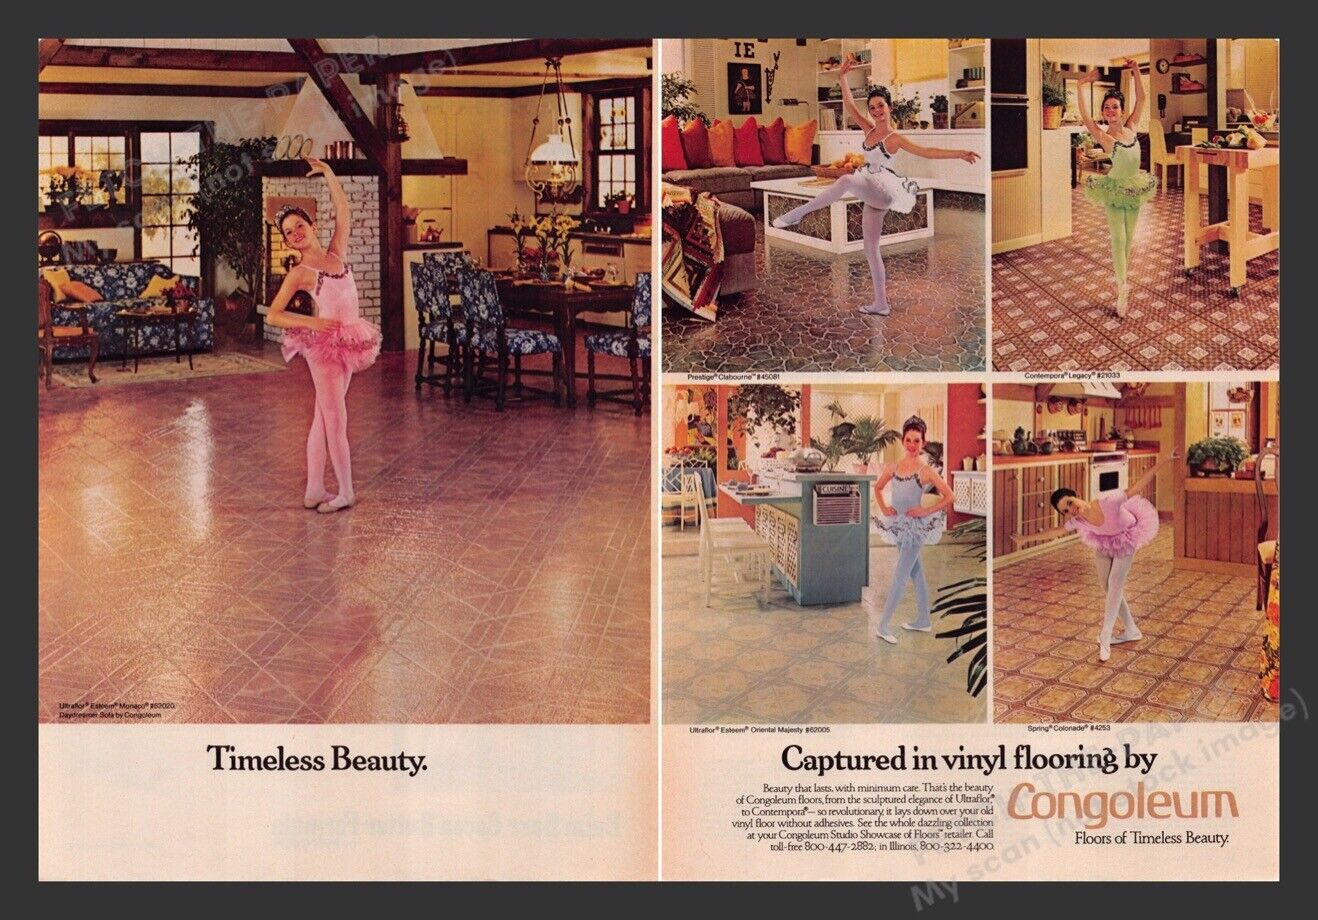 Congoleum Vinyl Flooring with Ballerinas 1980s Print Advertisement (2 Pgs) 1981